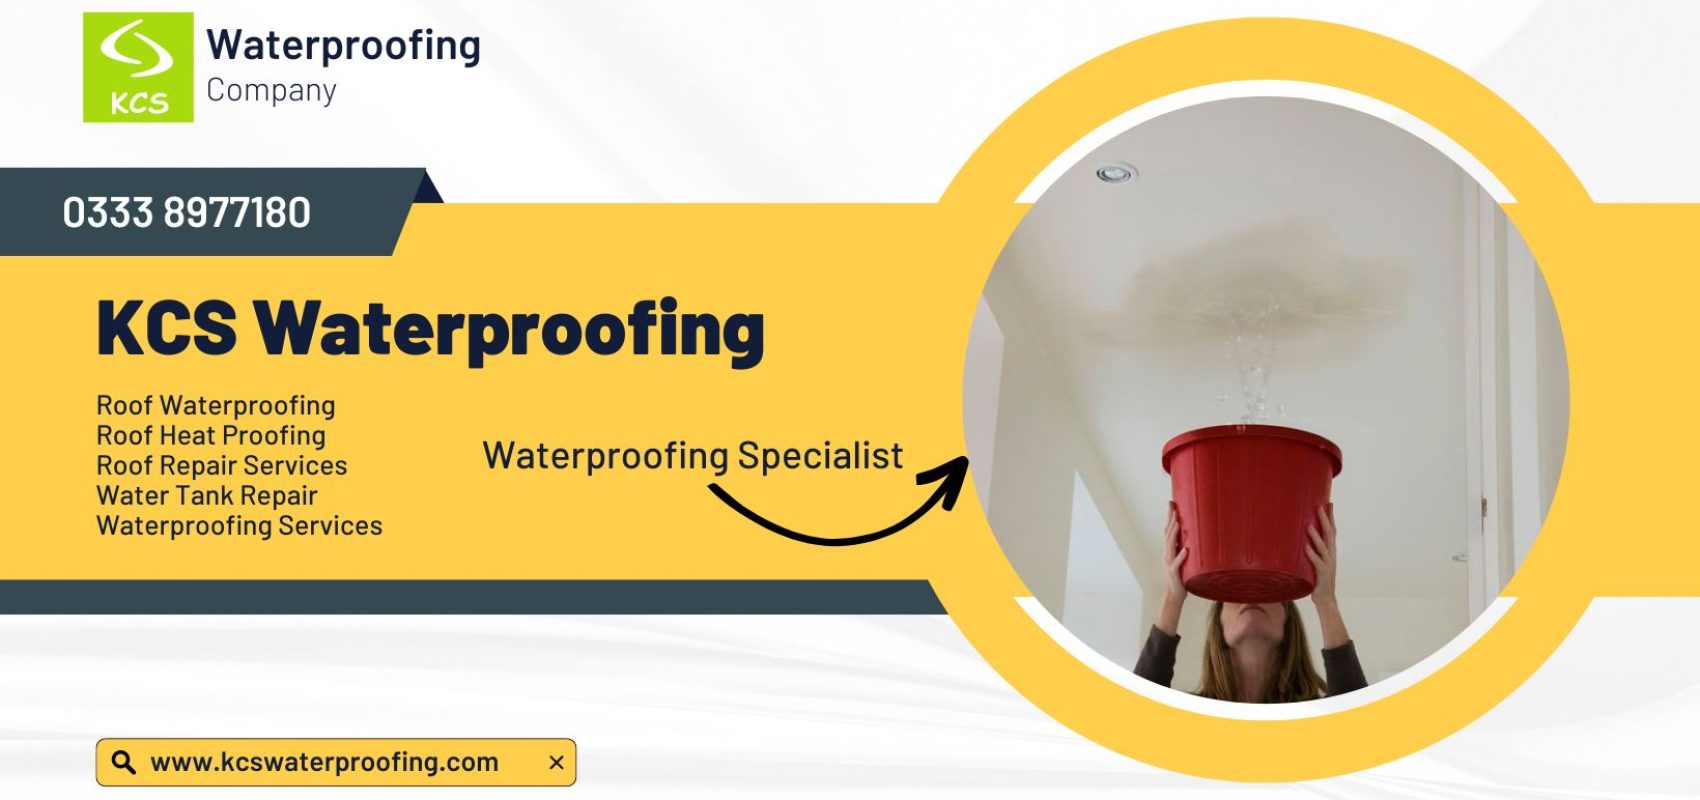 Waterproofing Services